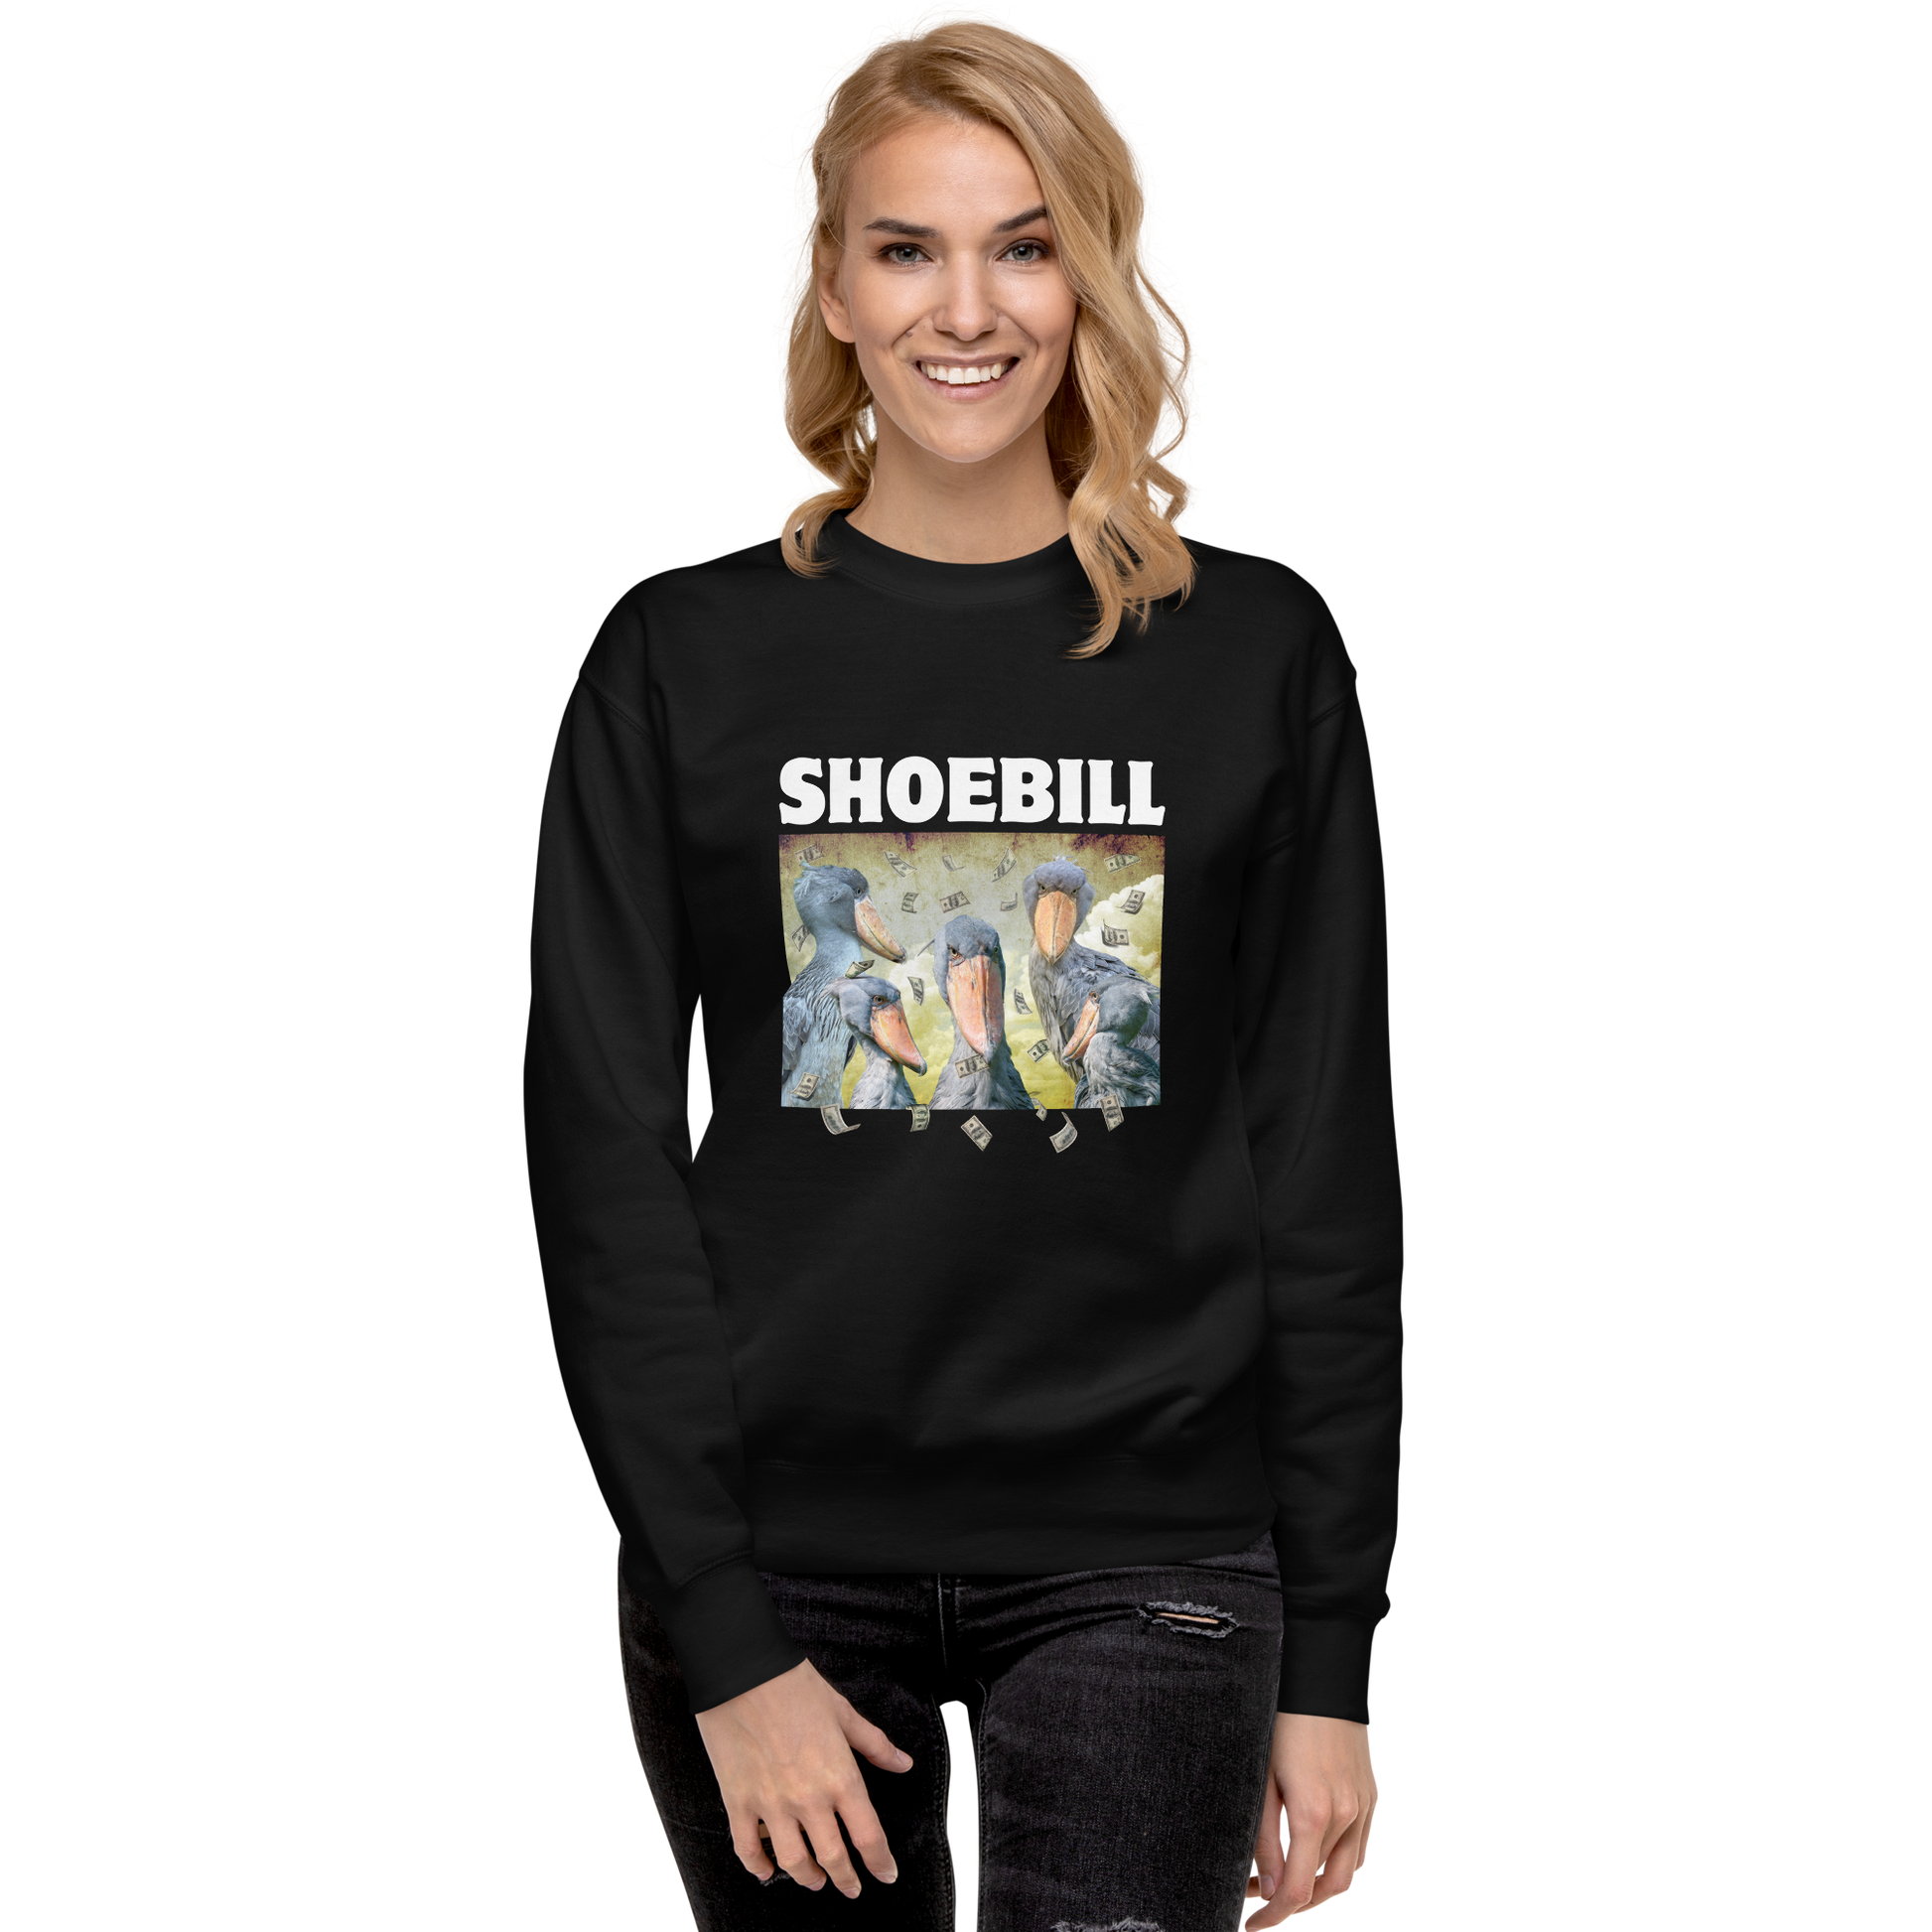 Woman wearing a Black Premium Shoebill Sweatshirt featuring a cool Shoebill graphic on the chest - Artsy/Funny Graphic Shoebill Stork Sweatshirts - Boozy Fox